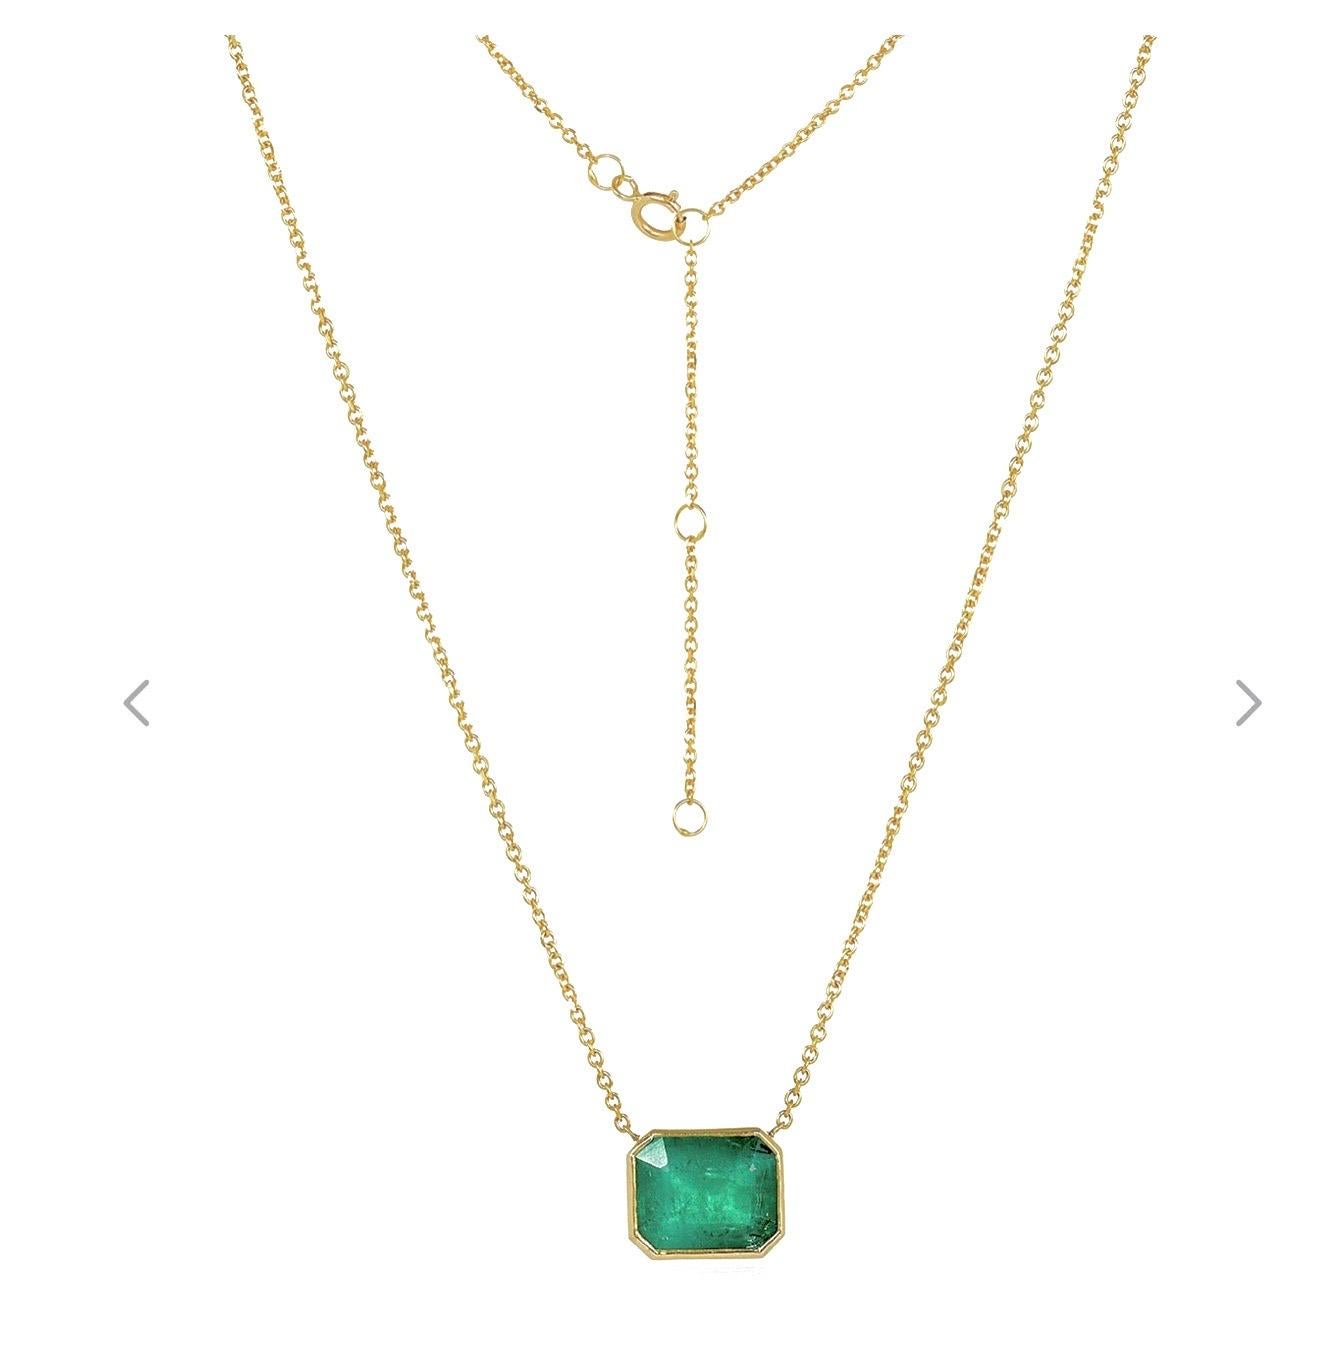 Emerald Cut 2.00 Carat Colombian Emerald Solitaire Pendant Necklace 18k Gold